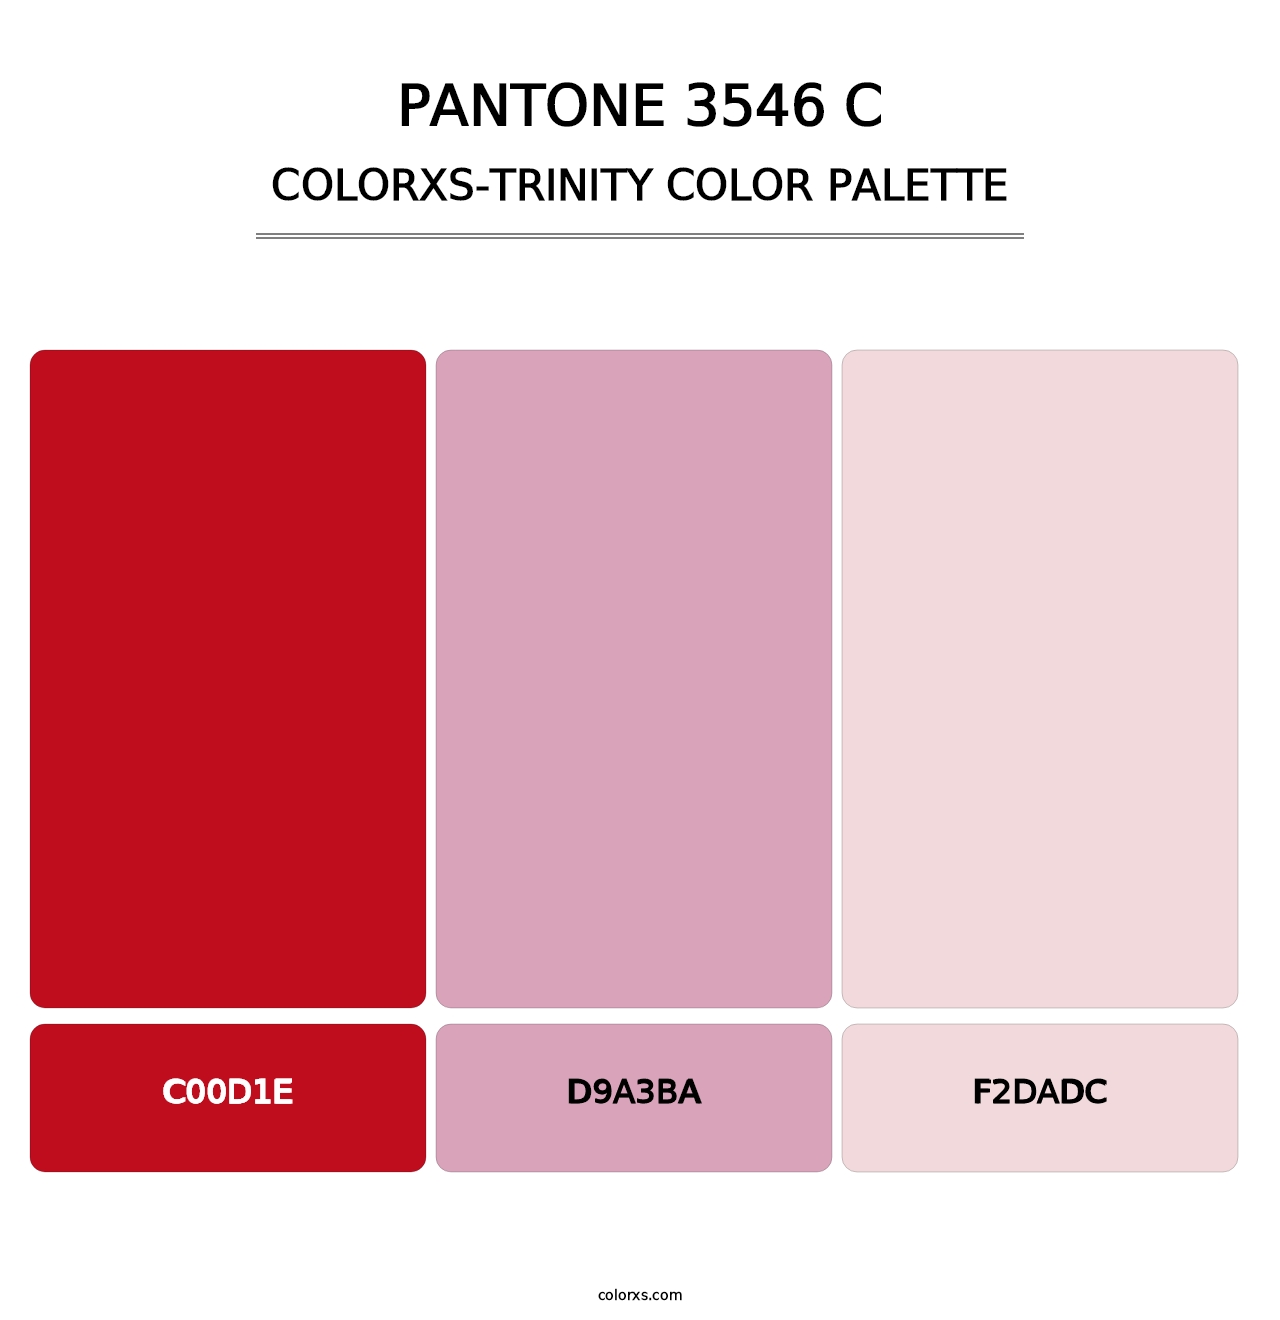 PANTONE 3546 C - Colorxs Trinity Palette